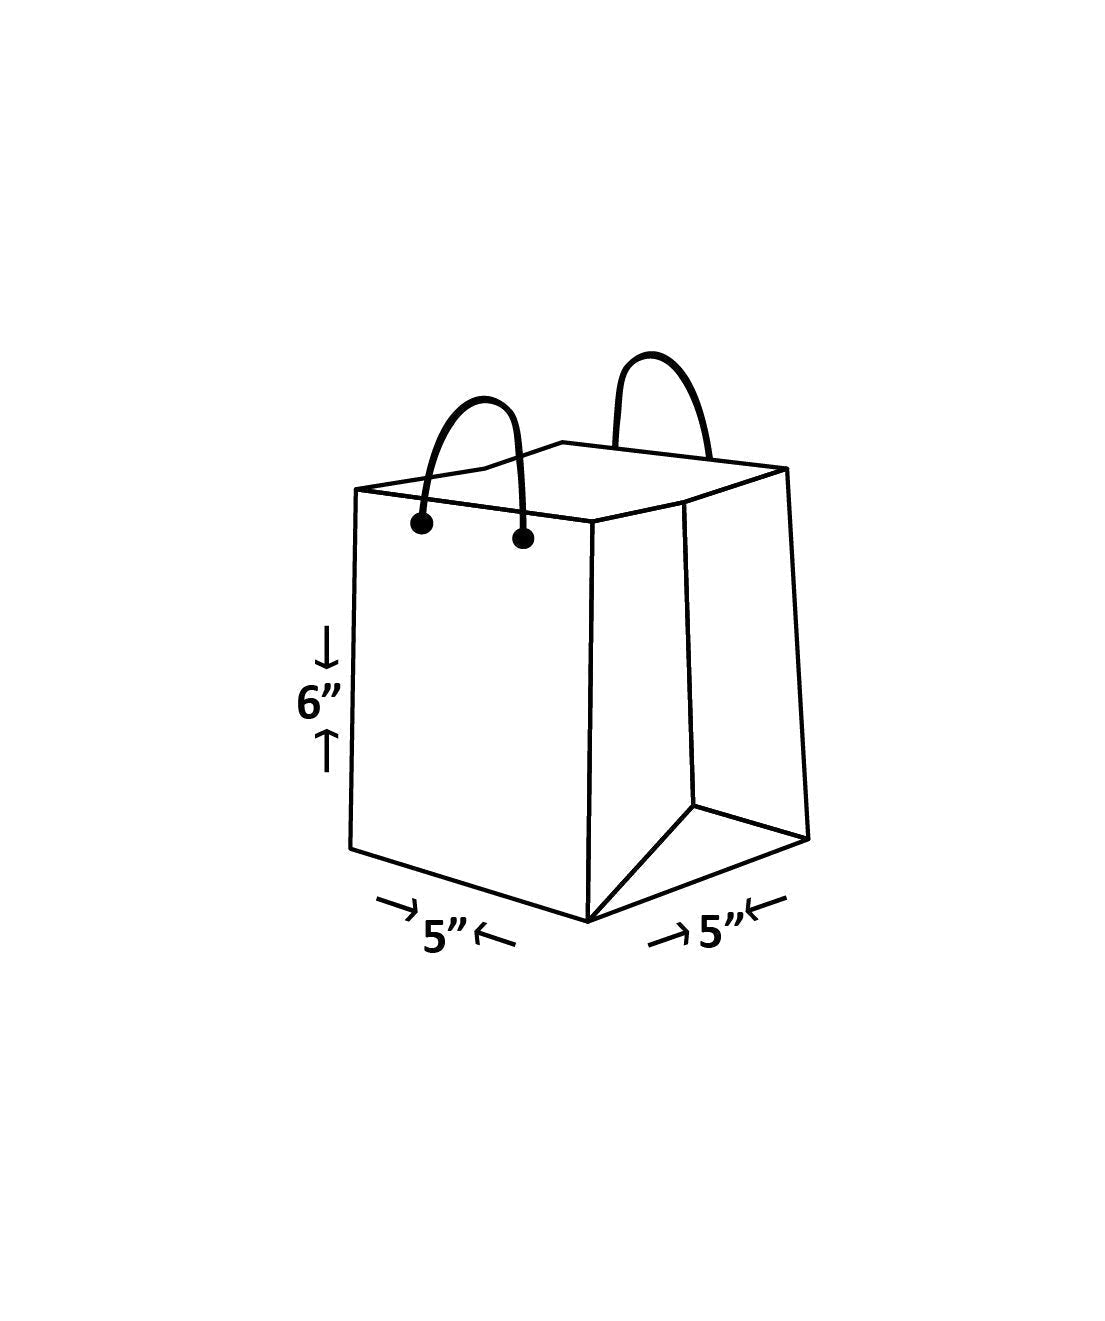 Plain White & Gold Line Design Bag for Packing Paper Bags